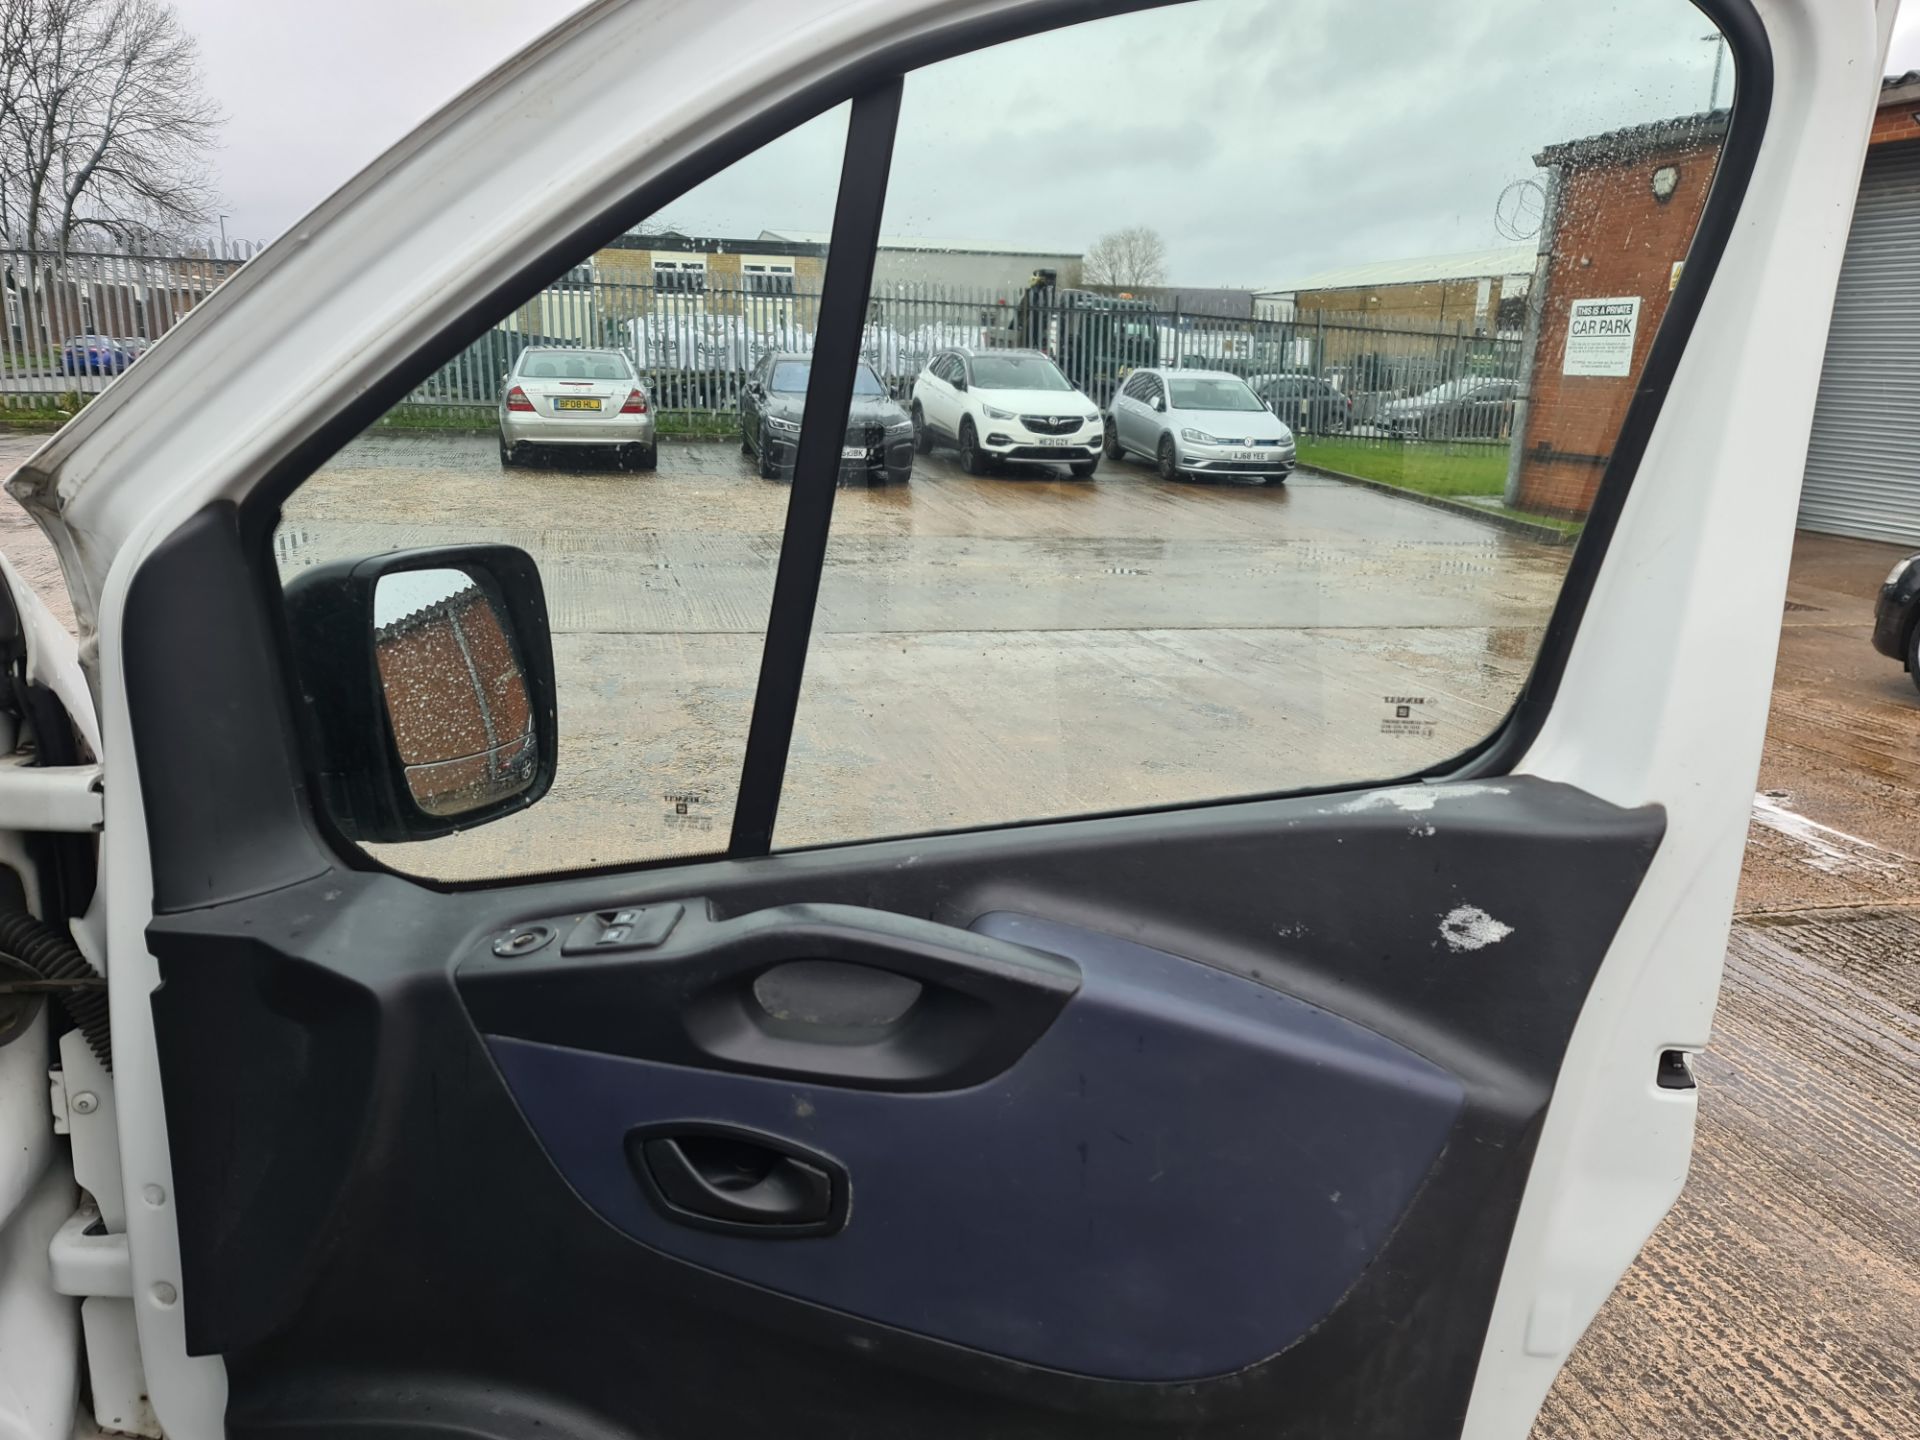 2015 Vauxhall Vivaro 2900 CDTi panel van - Image 12 of 66